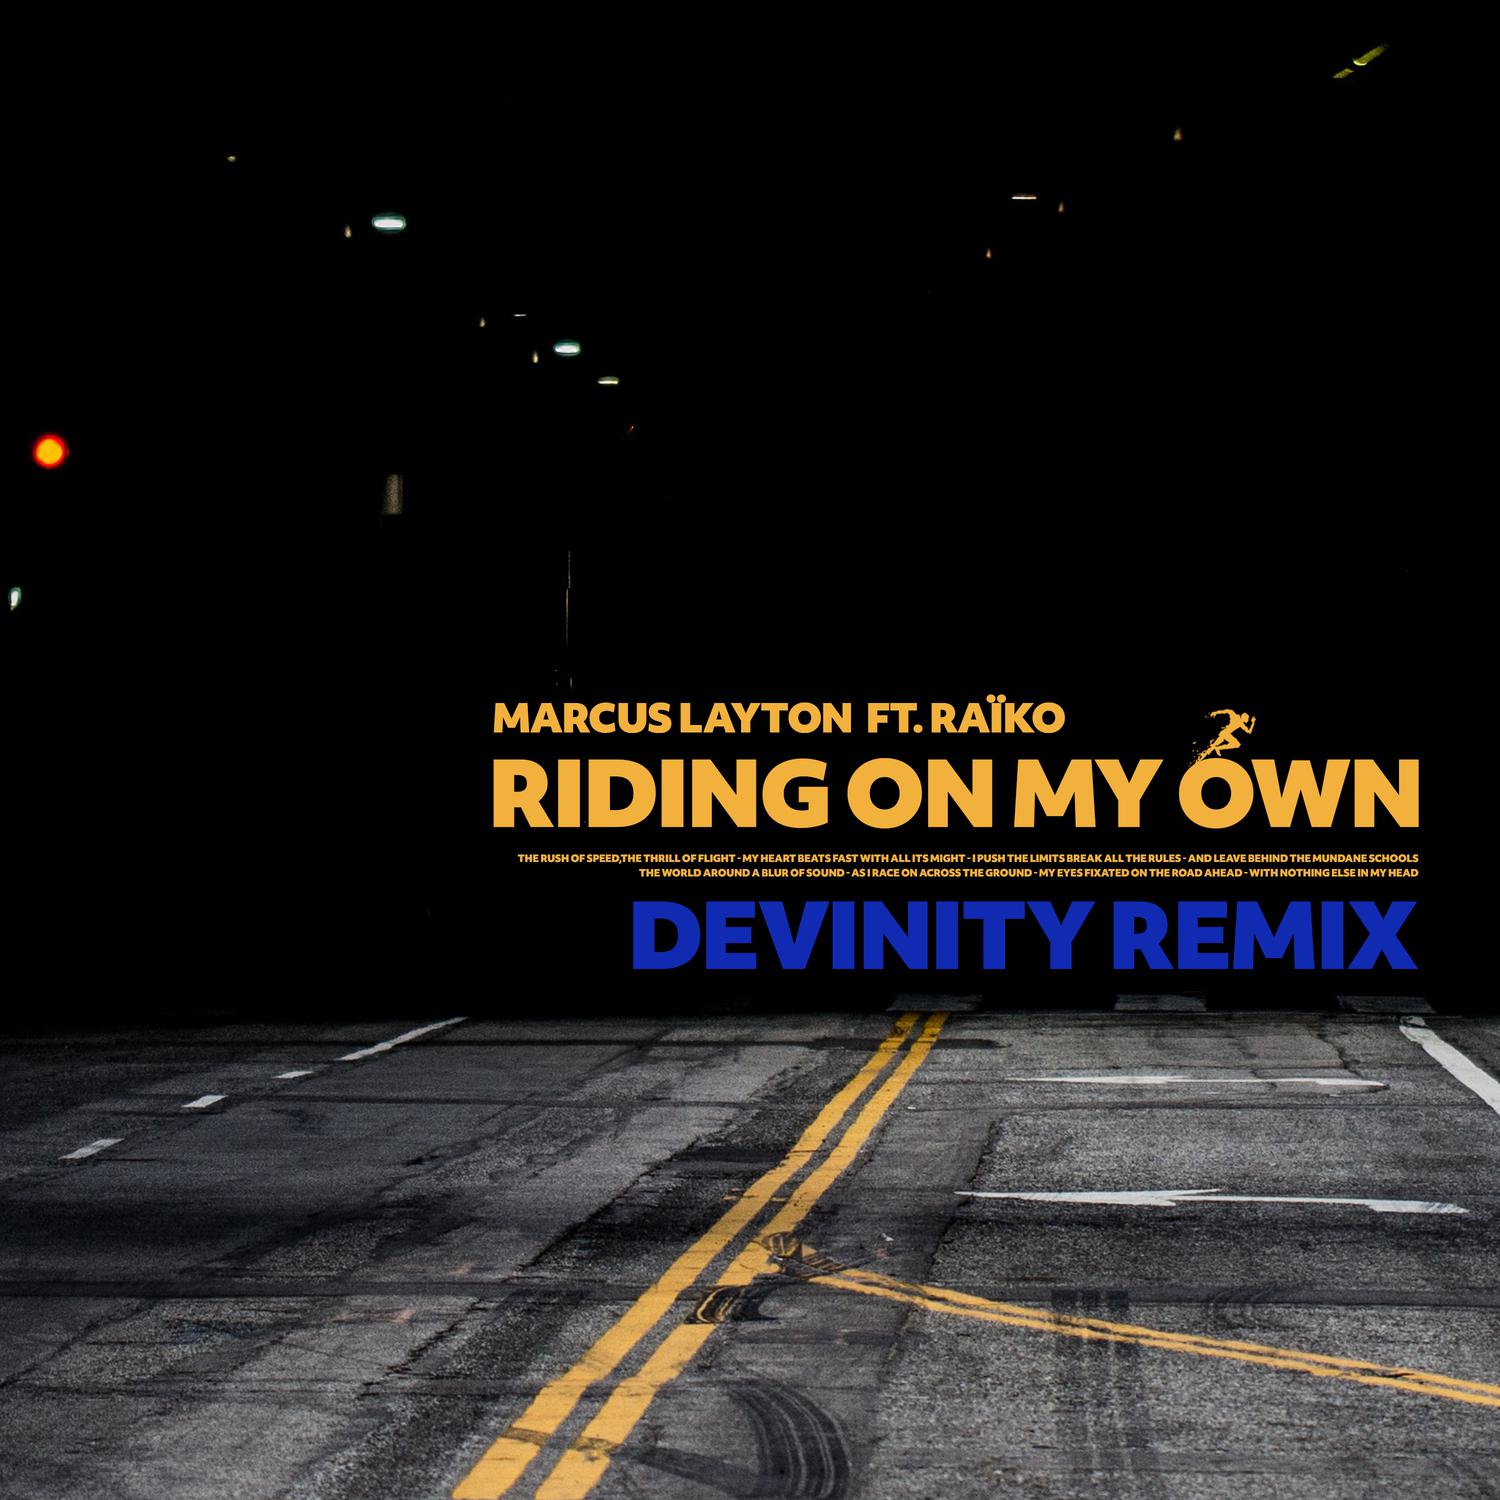 Marcus Layton - Riding On My Own (Devinity Remix)